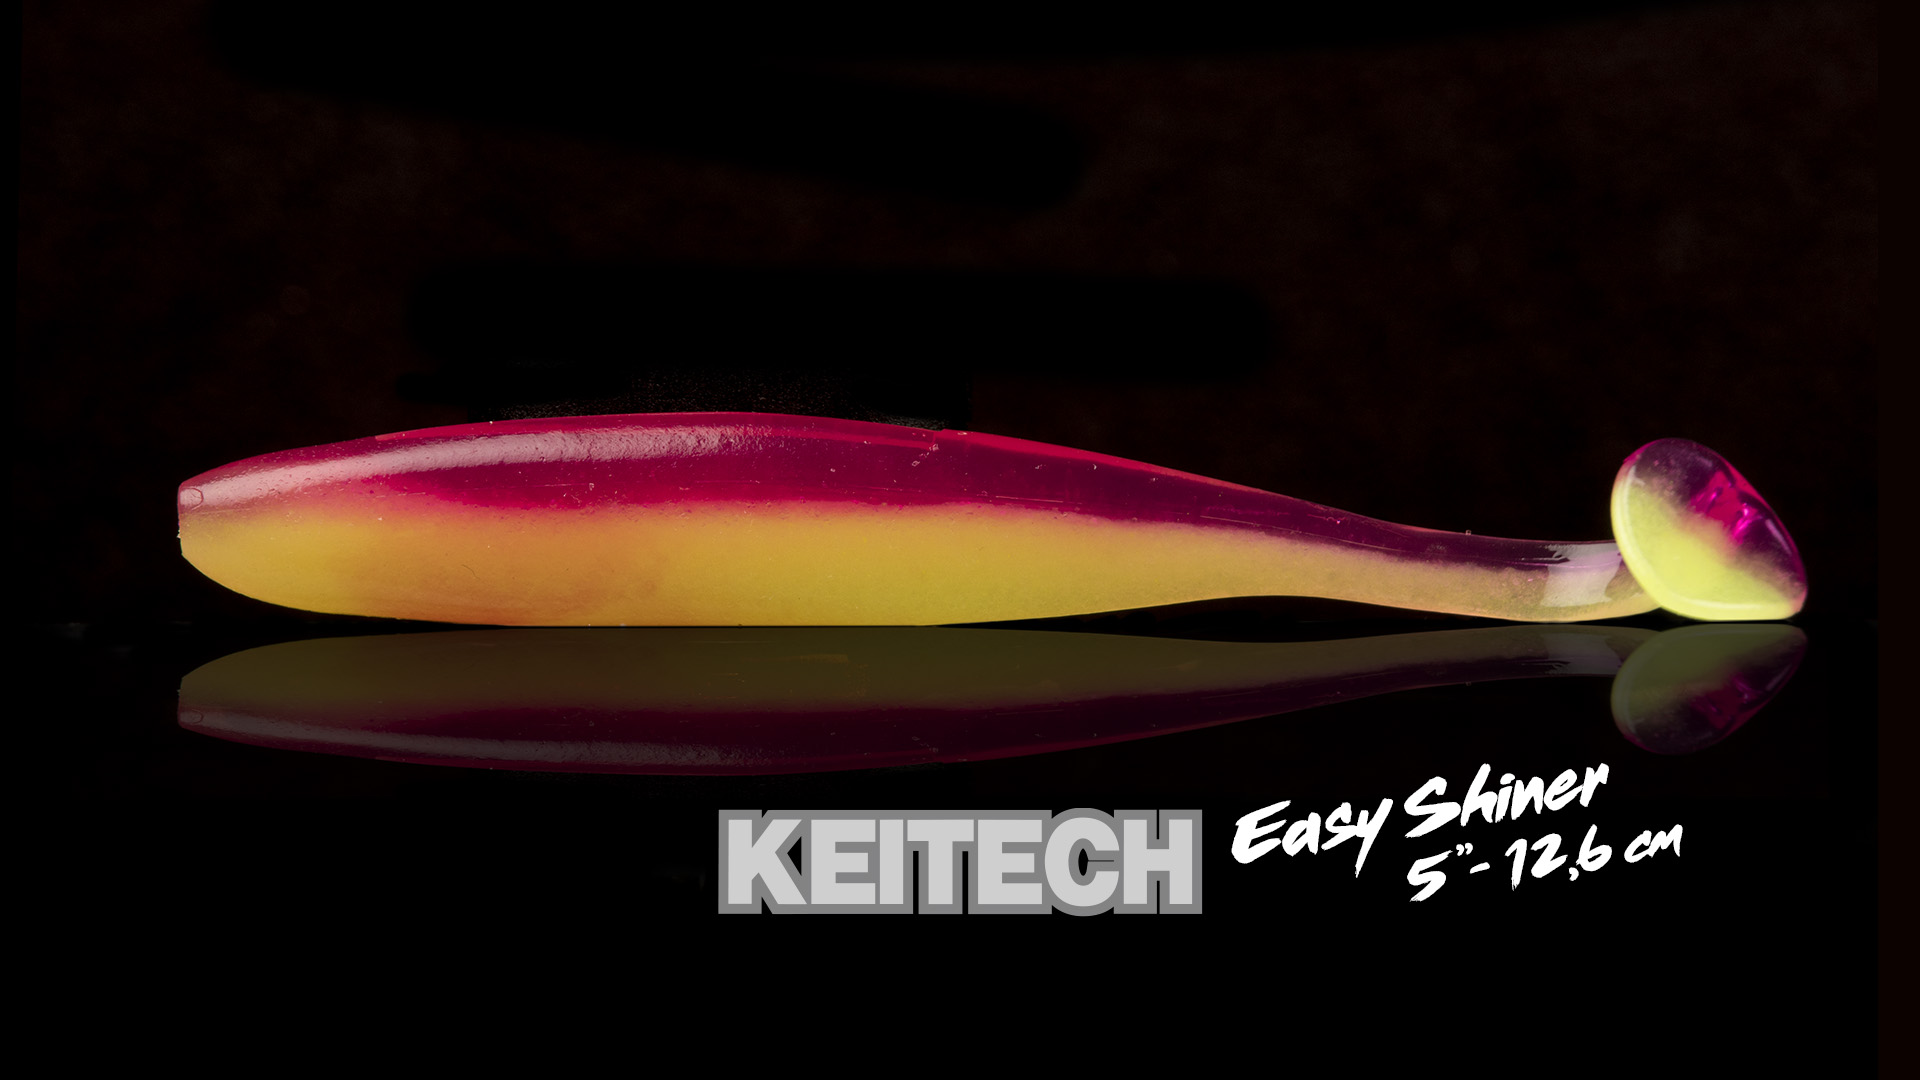 Keitech-Easy-Shiner-50-126-cm